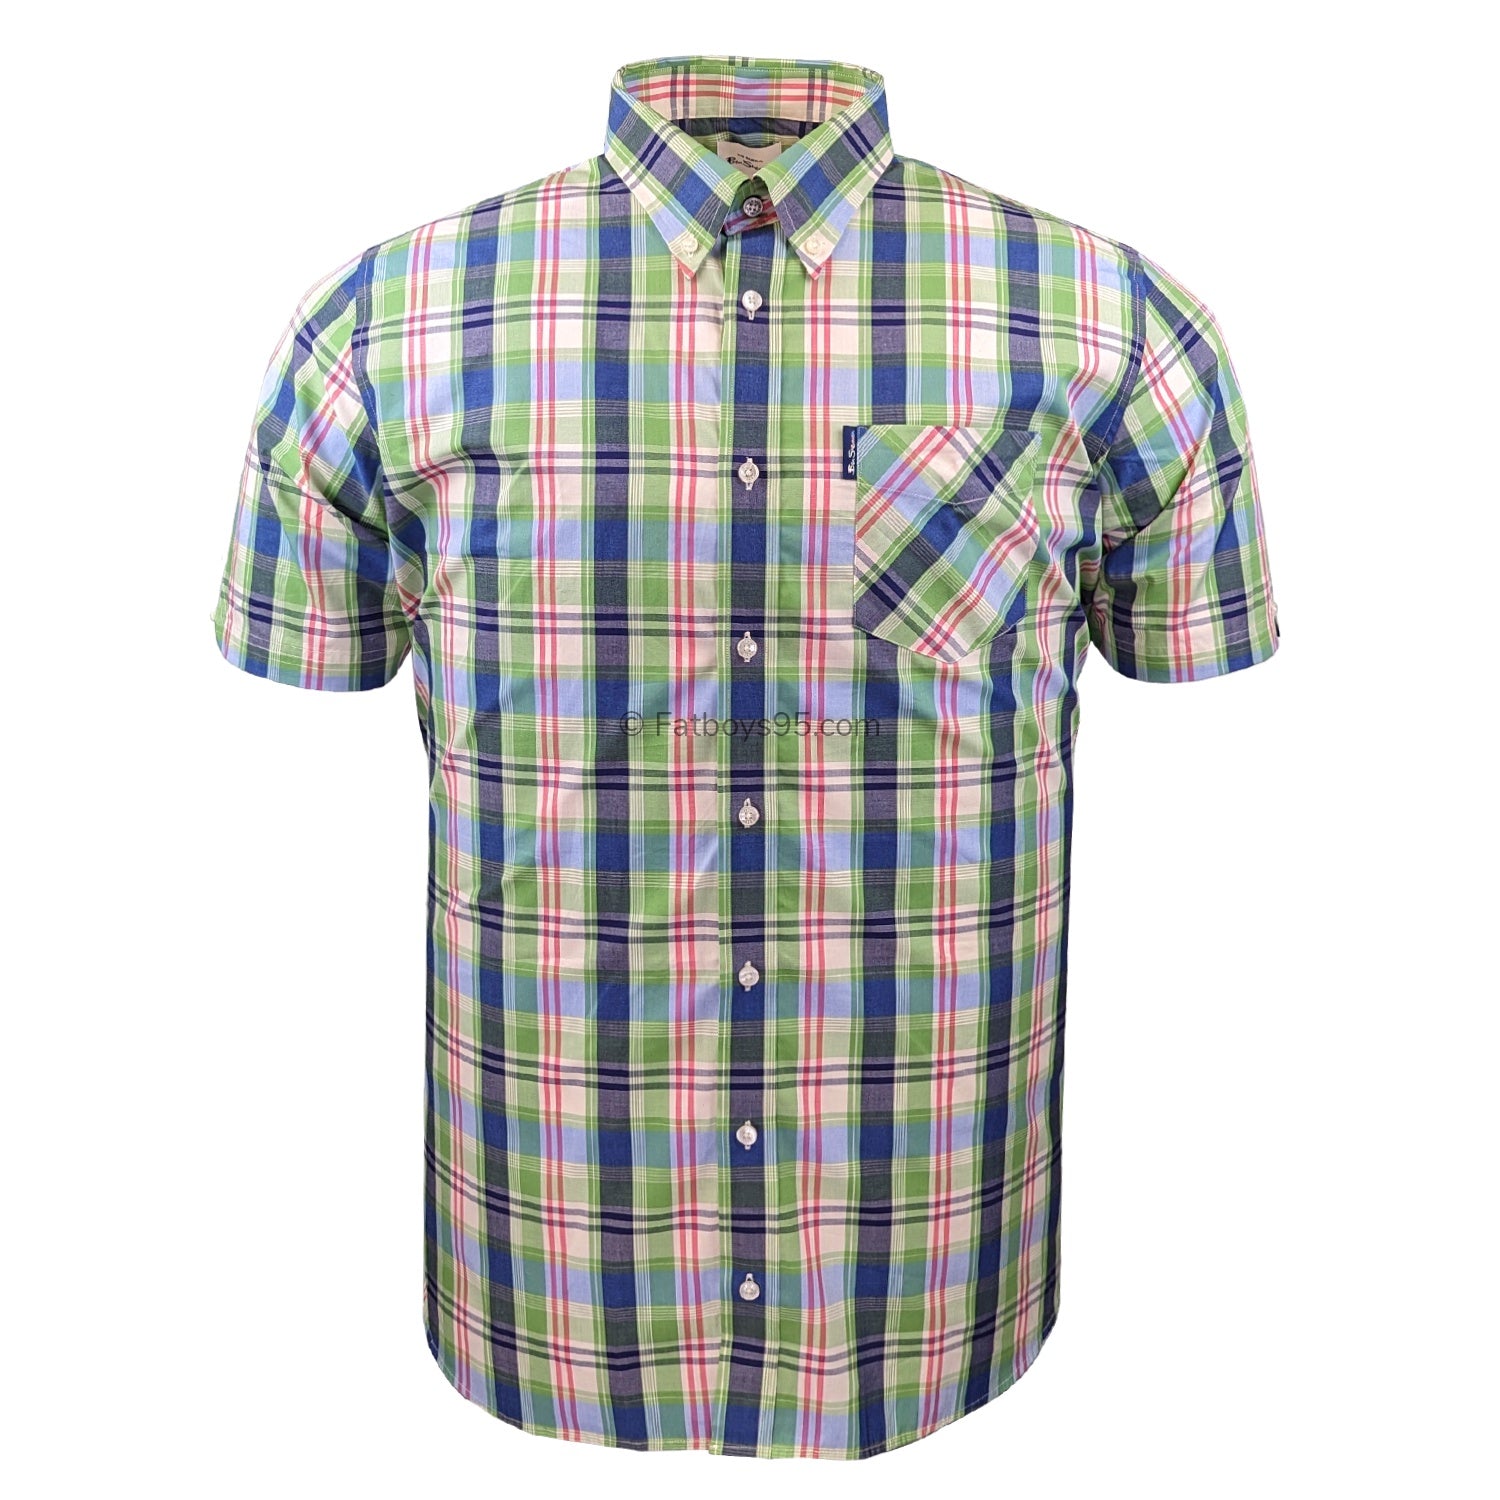 Ben Sherman Gingham Overcheck S/S Shirt - 0075937IL - Grass Green 1